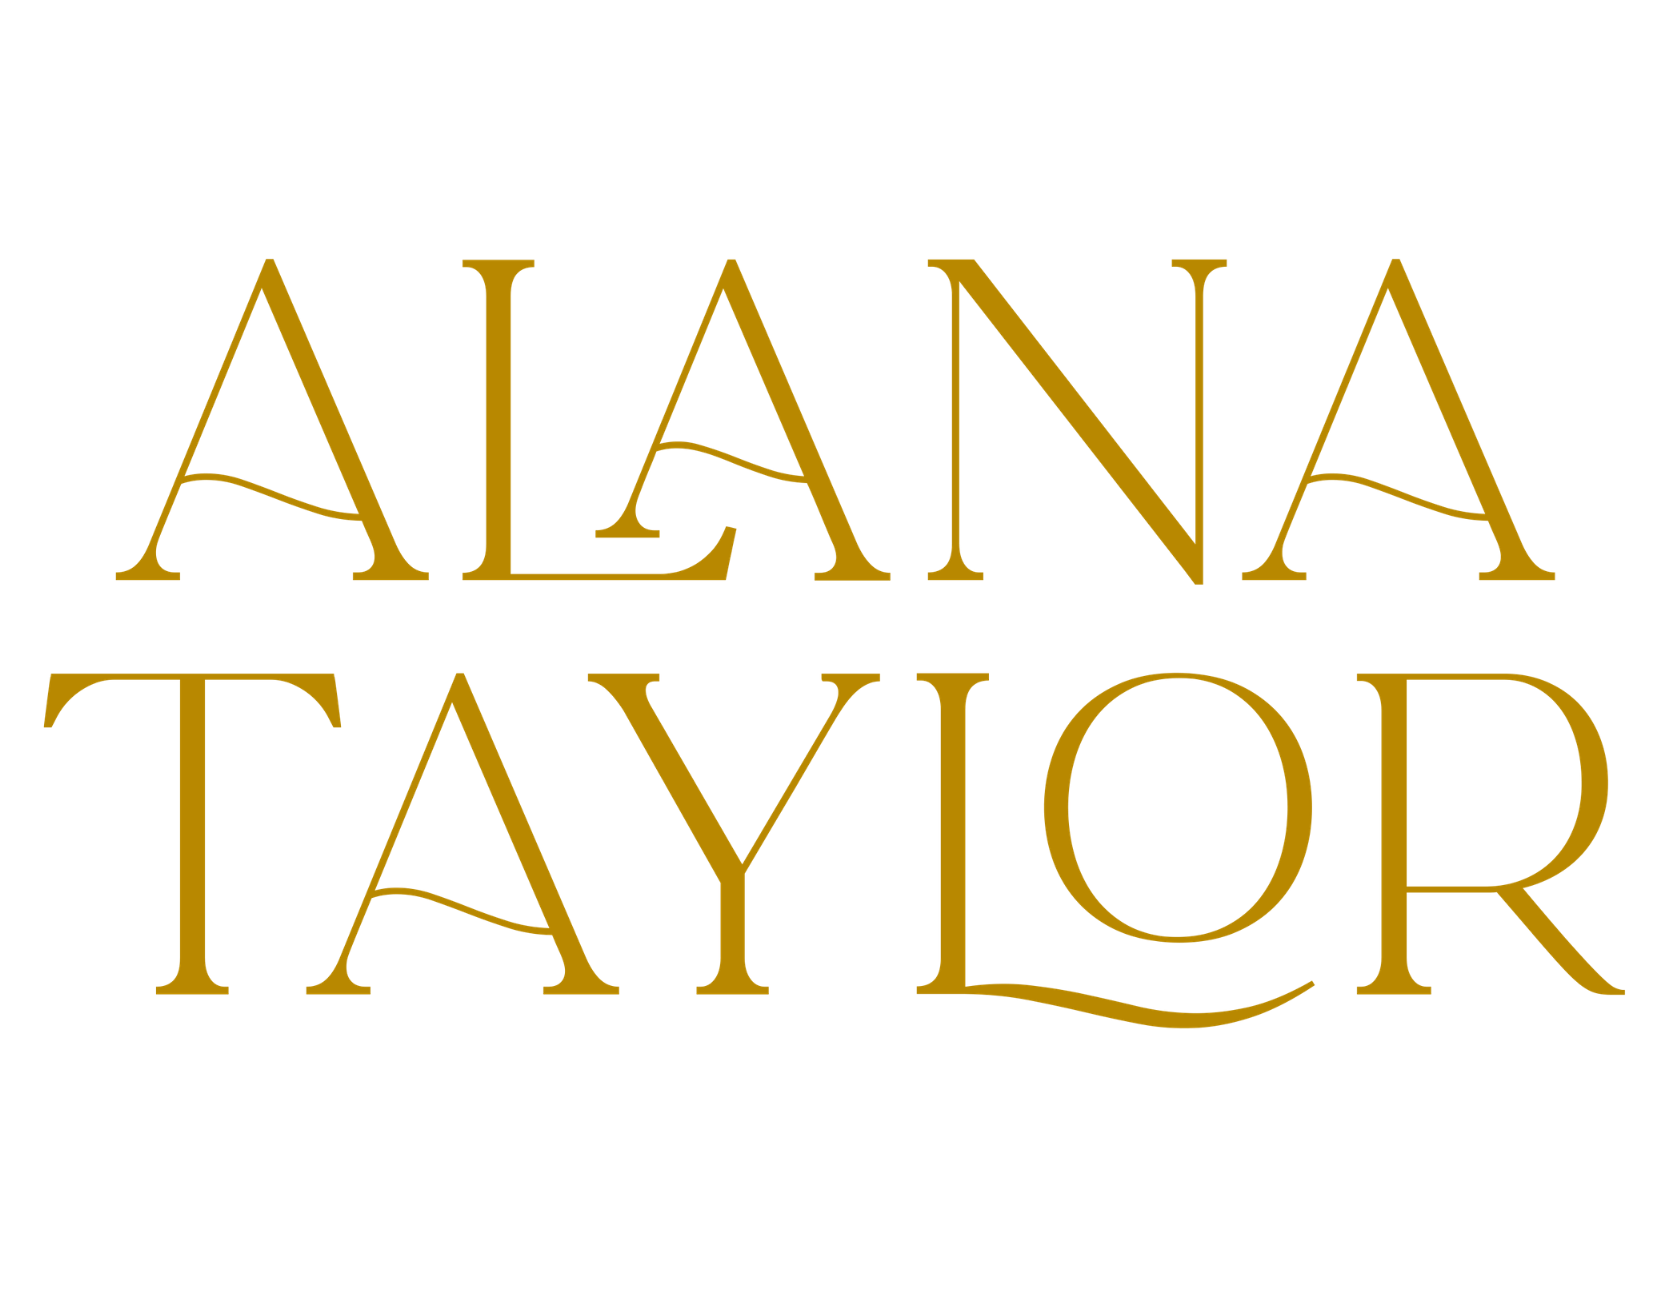 Taylor onlyfans alanna Best Onlyfans